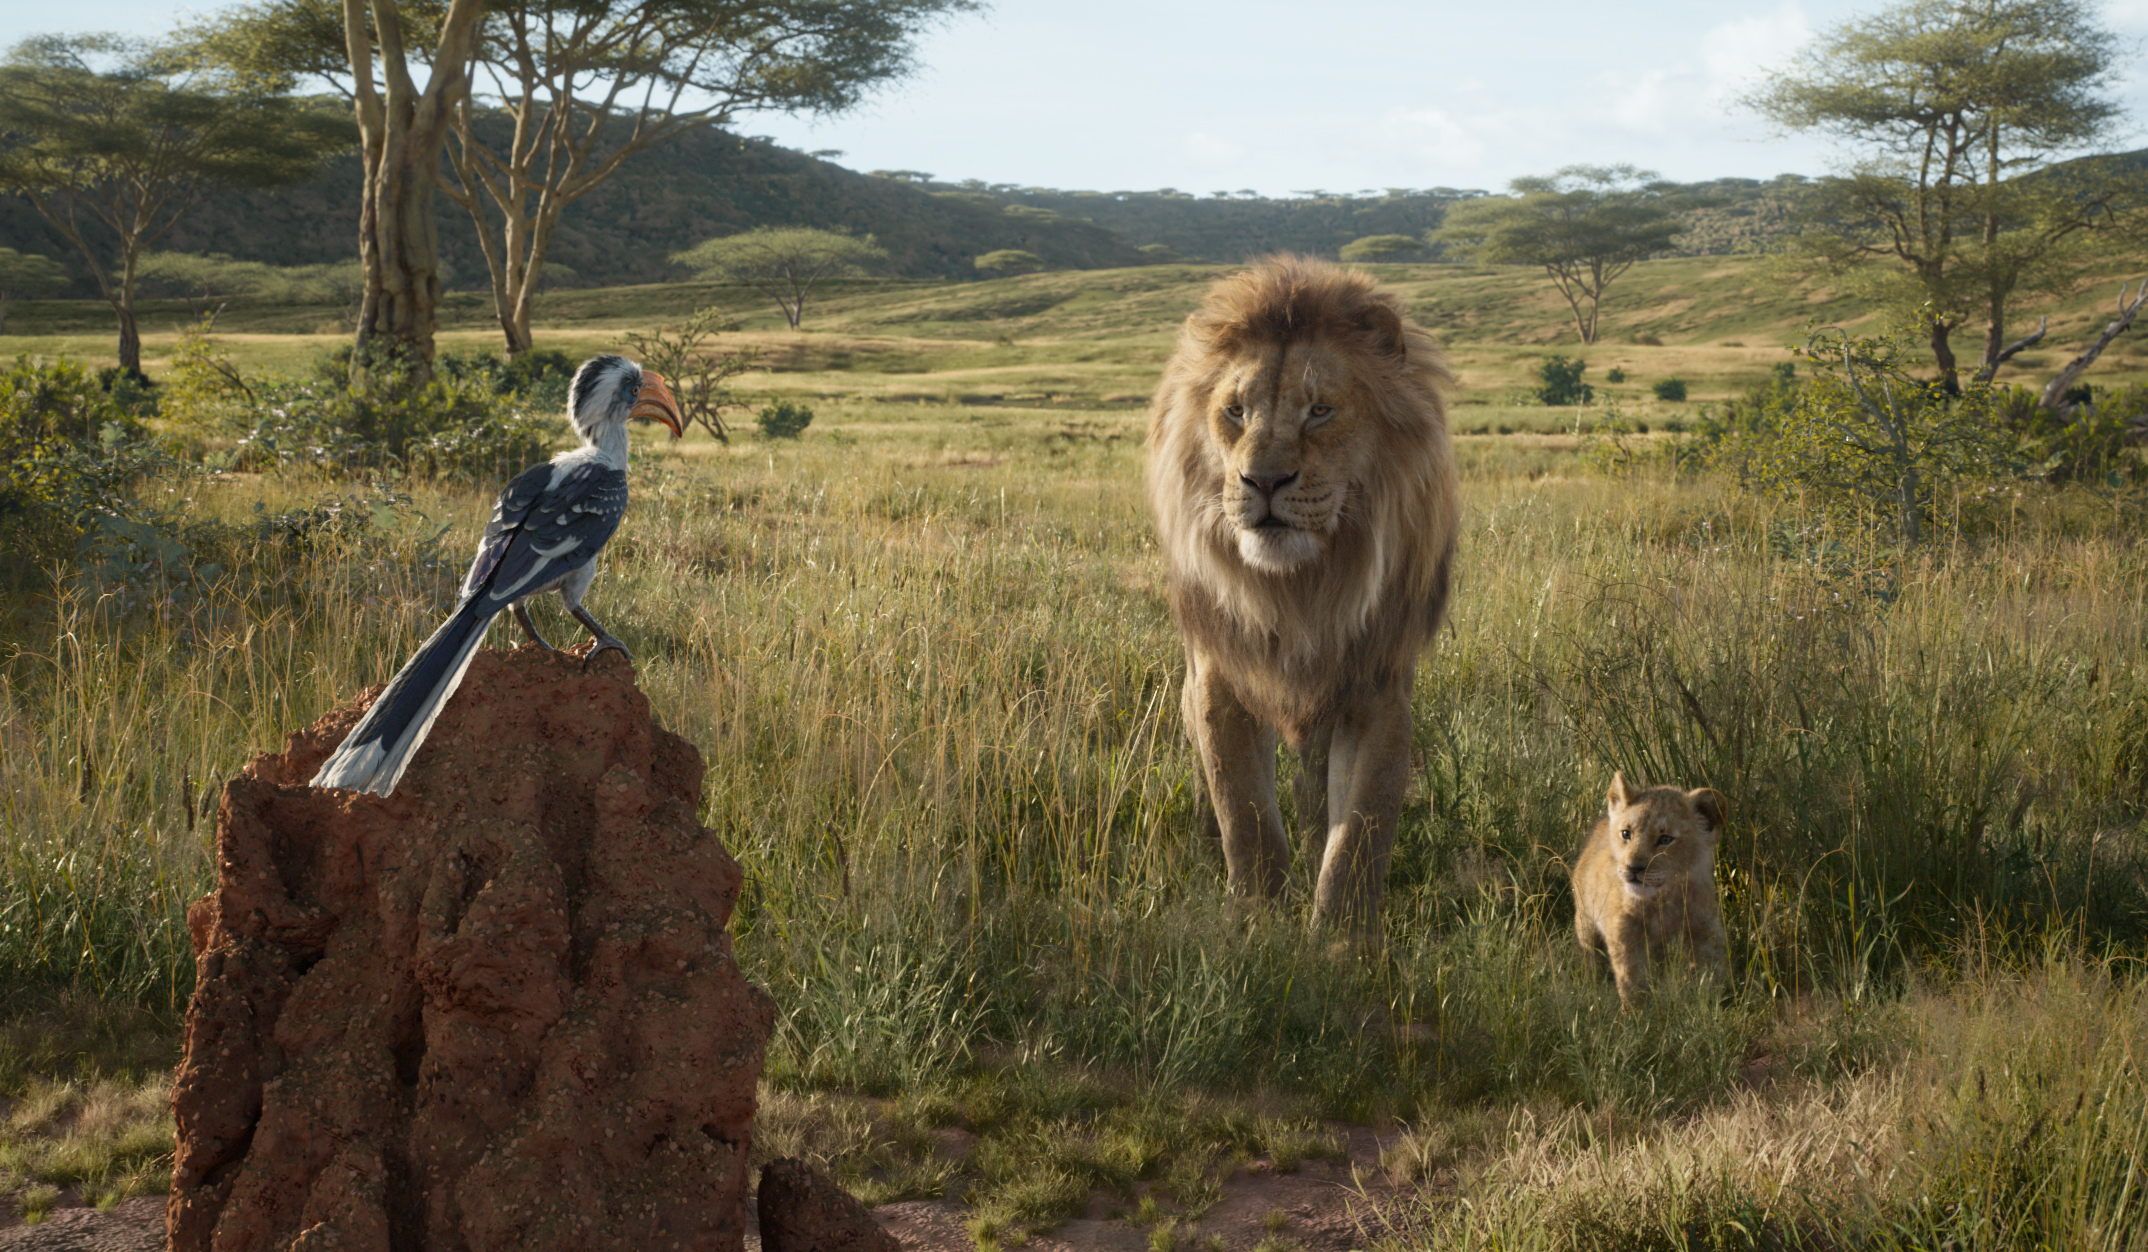 Mufasa The Lion King Simba The Lion King 2019 Zazu The Lion King 2148x1252